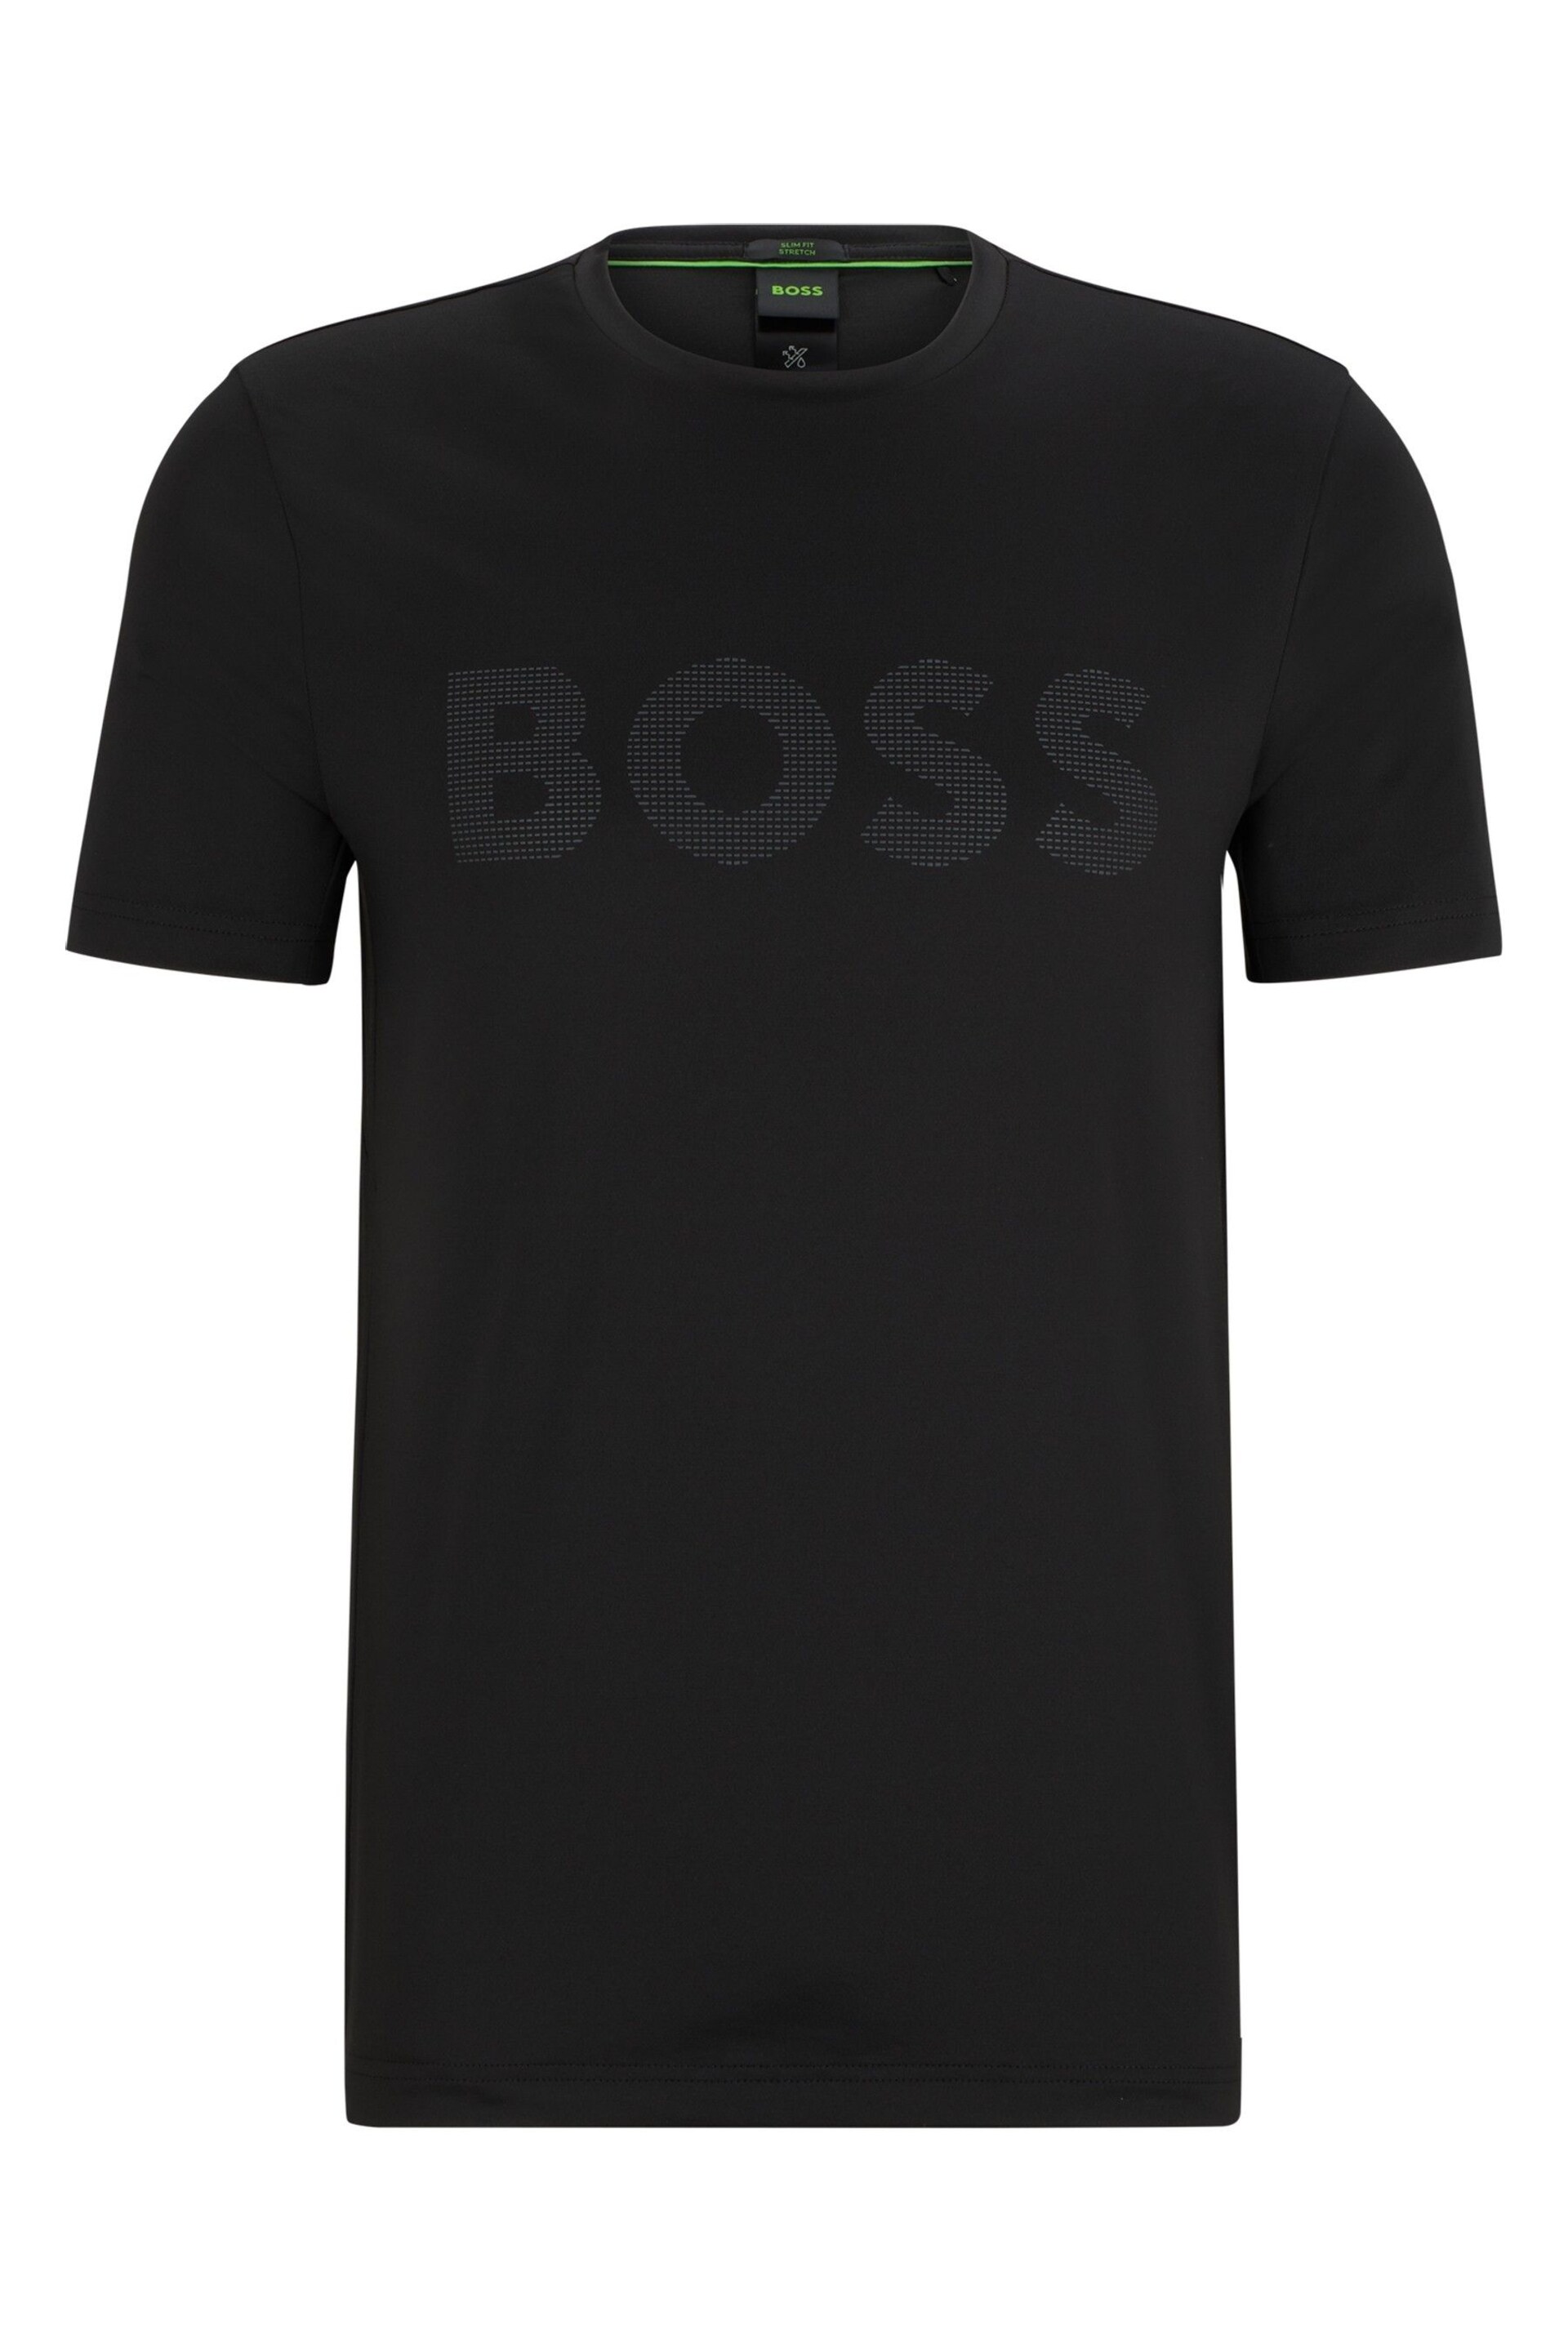 BOSS Black Tonal Large Chest Logo Performance-Stretch T-Shirt - Image 5 of 5